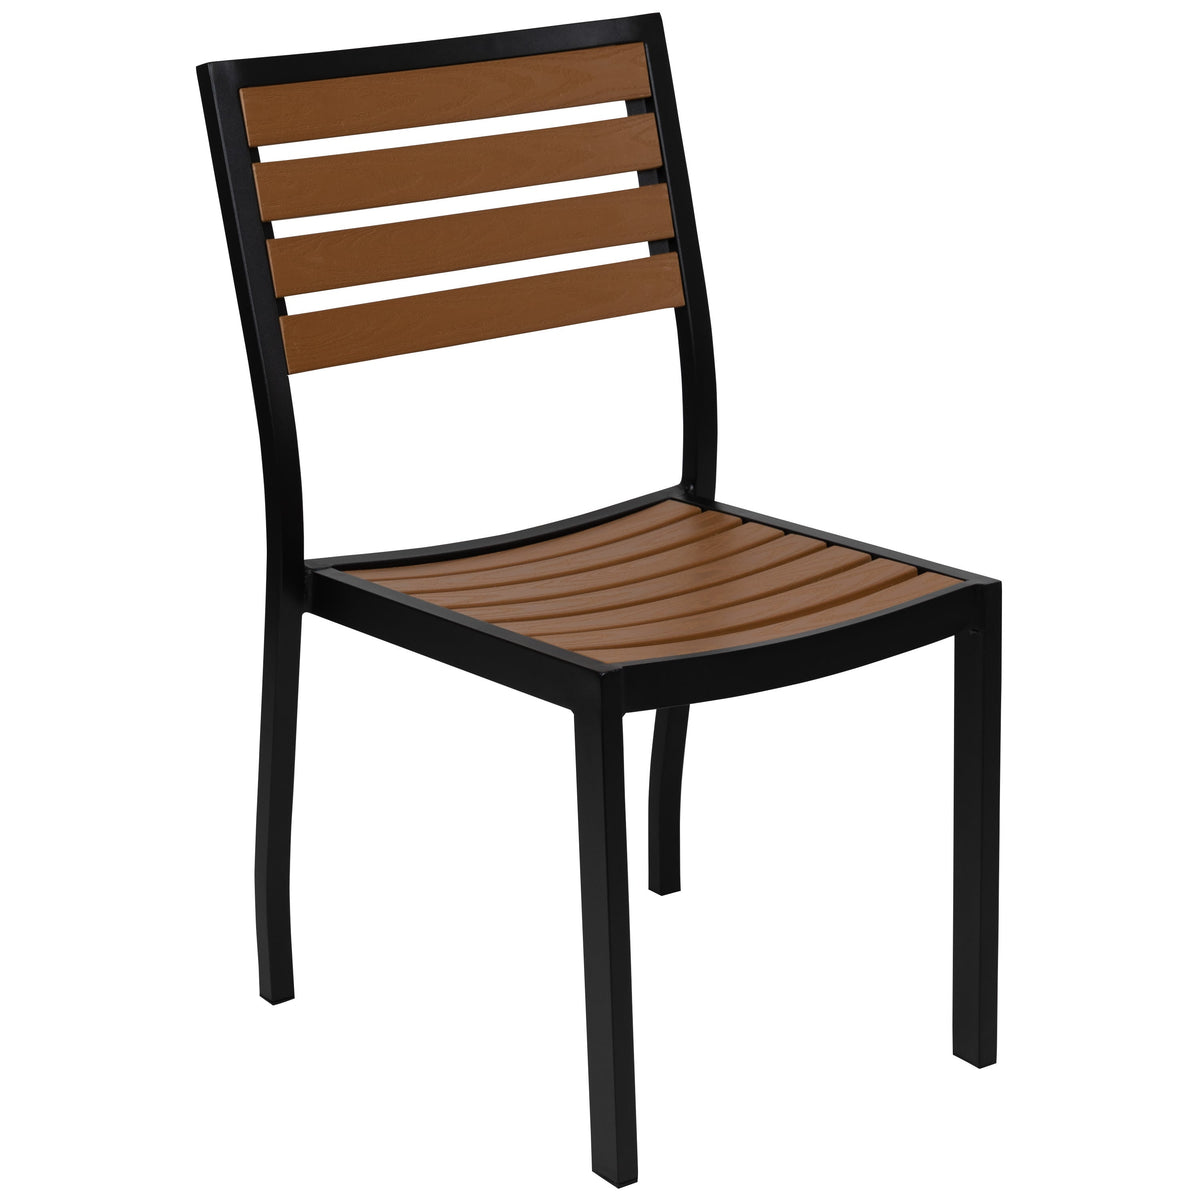 Teak |#| Outdoor Faux Teak Side Chair with Poly Slats - Teak Patio Chair